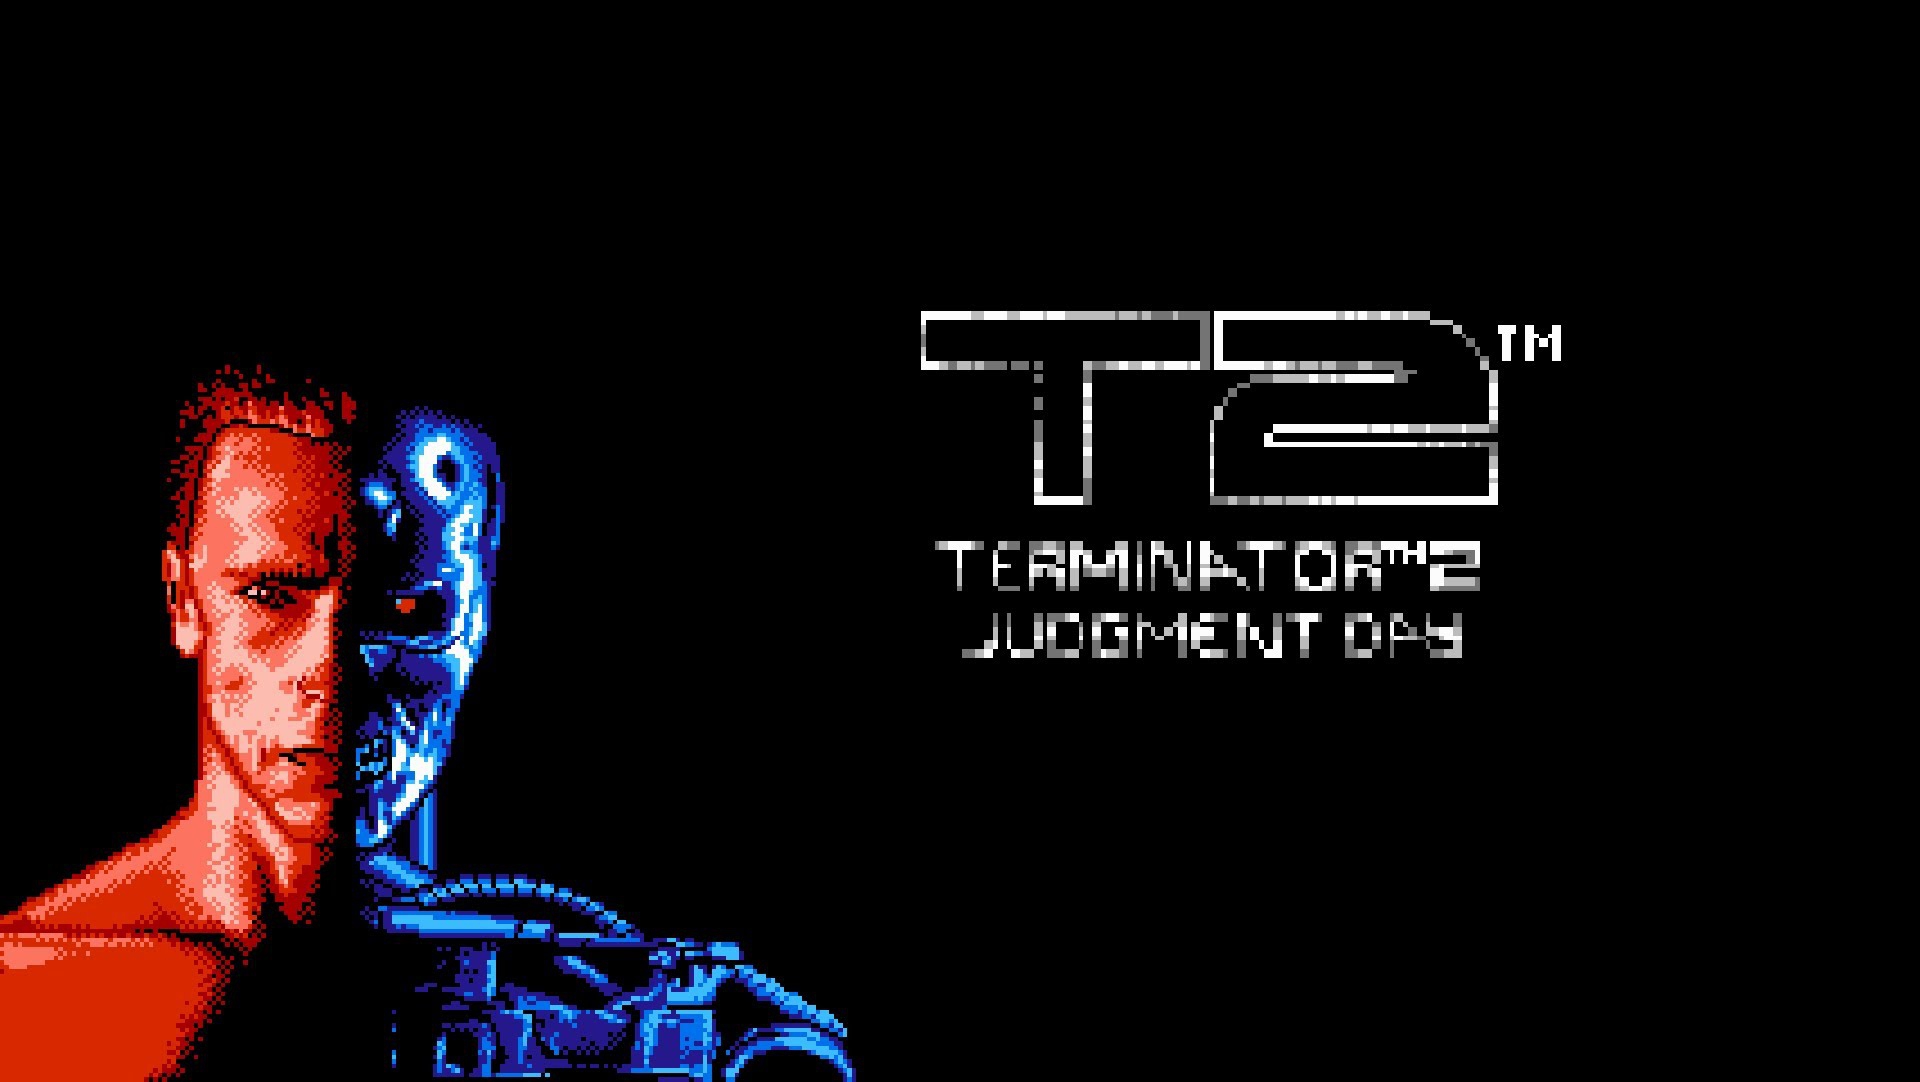 Judgement day игра. Терминатор 2 игра на Денди. Terminator 2 NES картридж. Игра Терминатор 2 на Дэнди. Обложки игр NES Terminator 2.